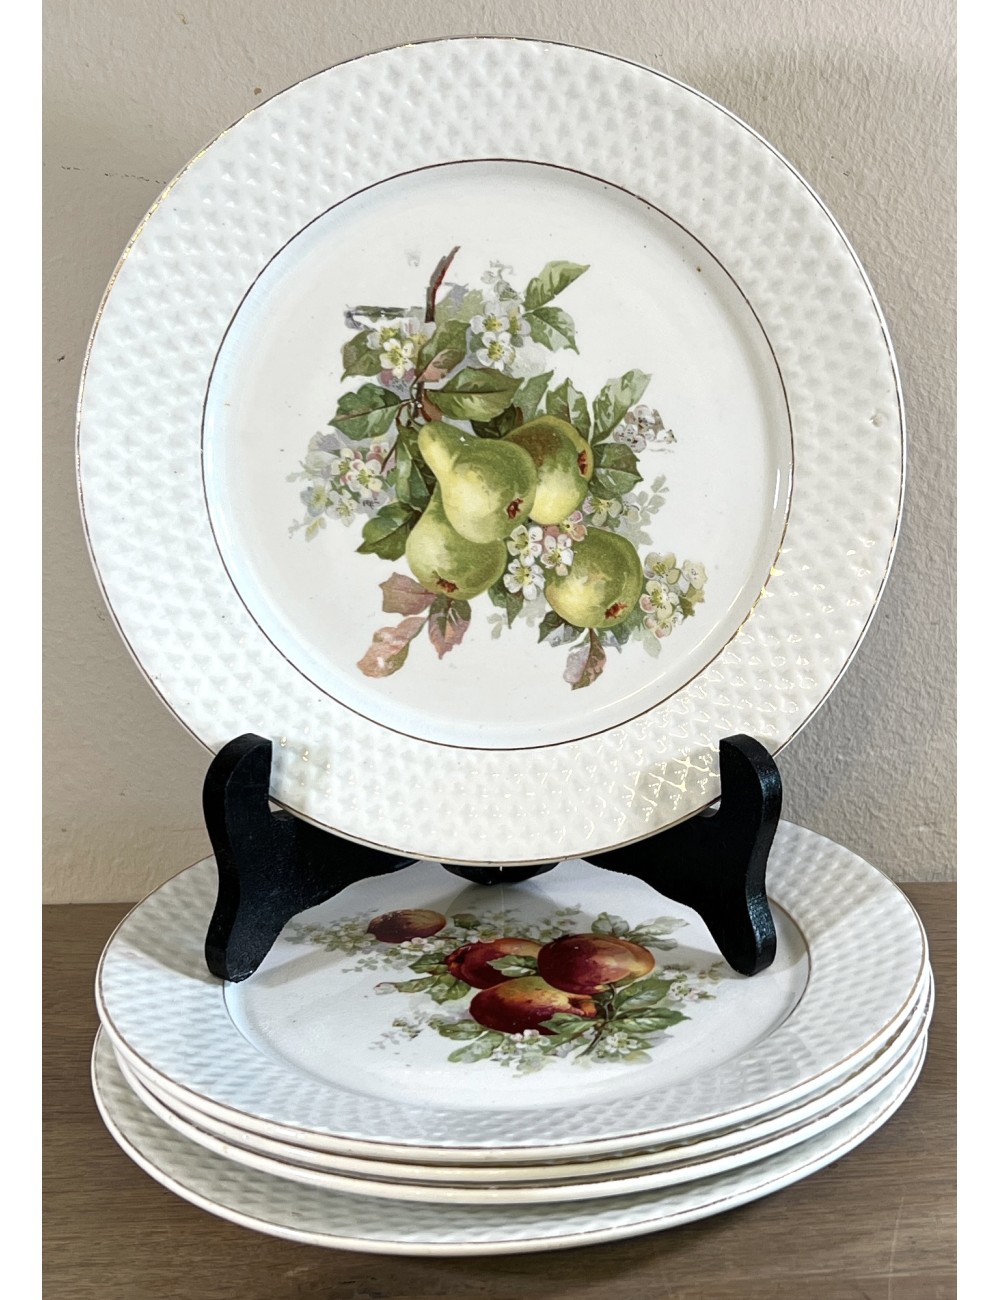 Breakfast plate / Dessert plate / Fruit plate - Societe Ceramique Maestricht - décor in different kinds of fruit